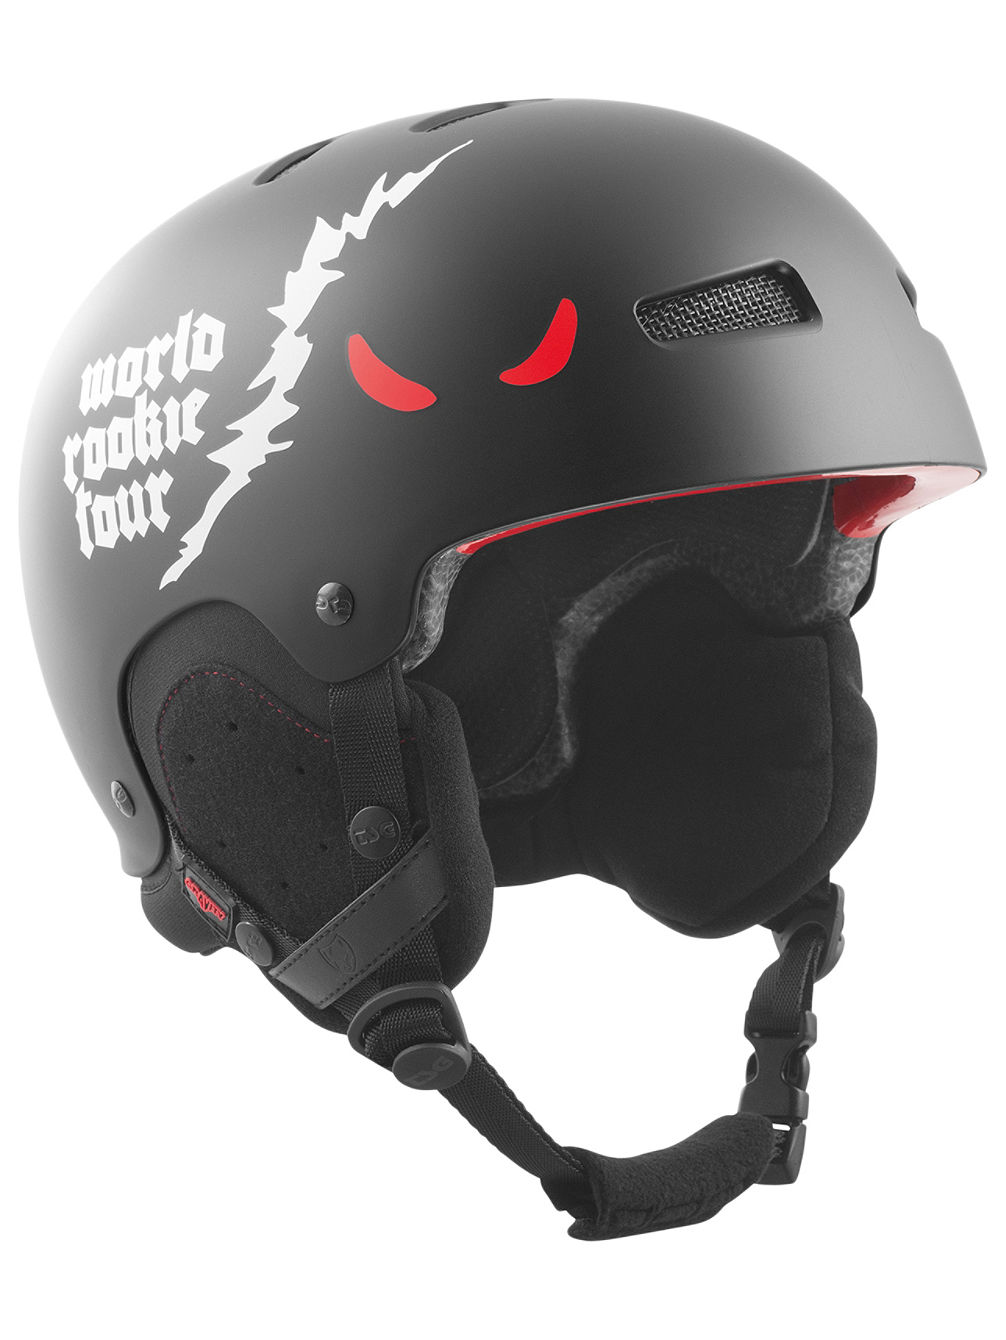 Gravity Company Design Helm